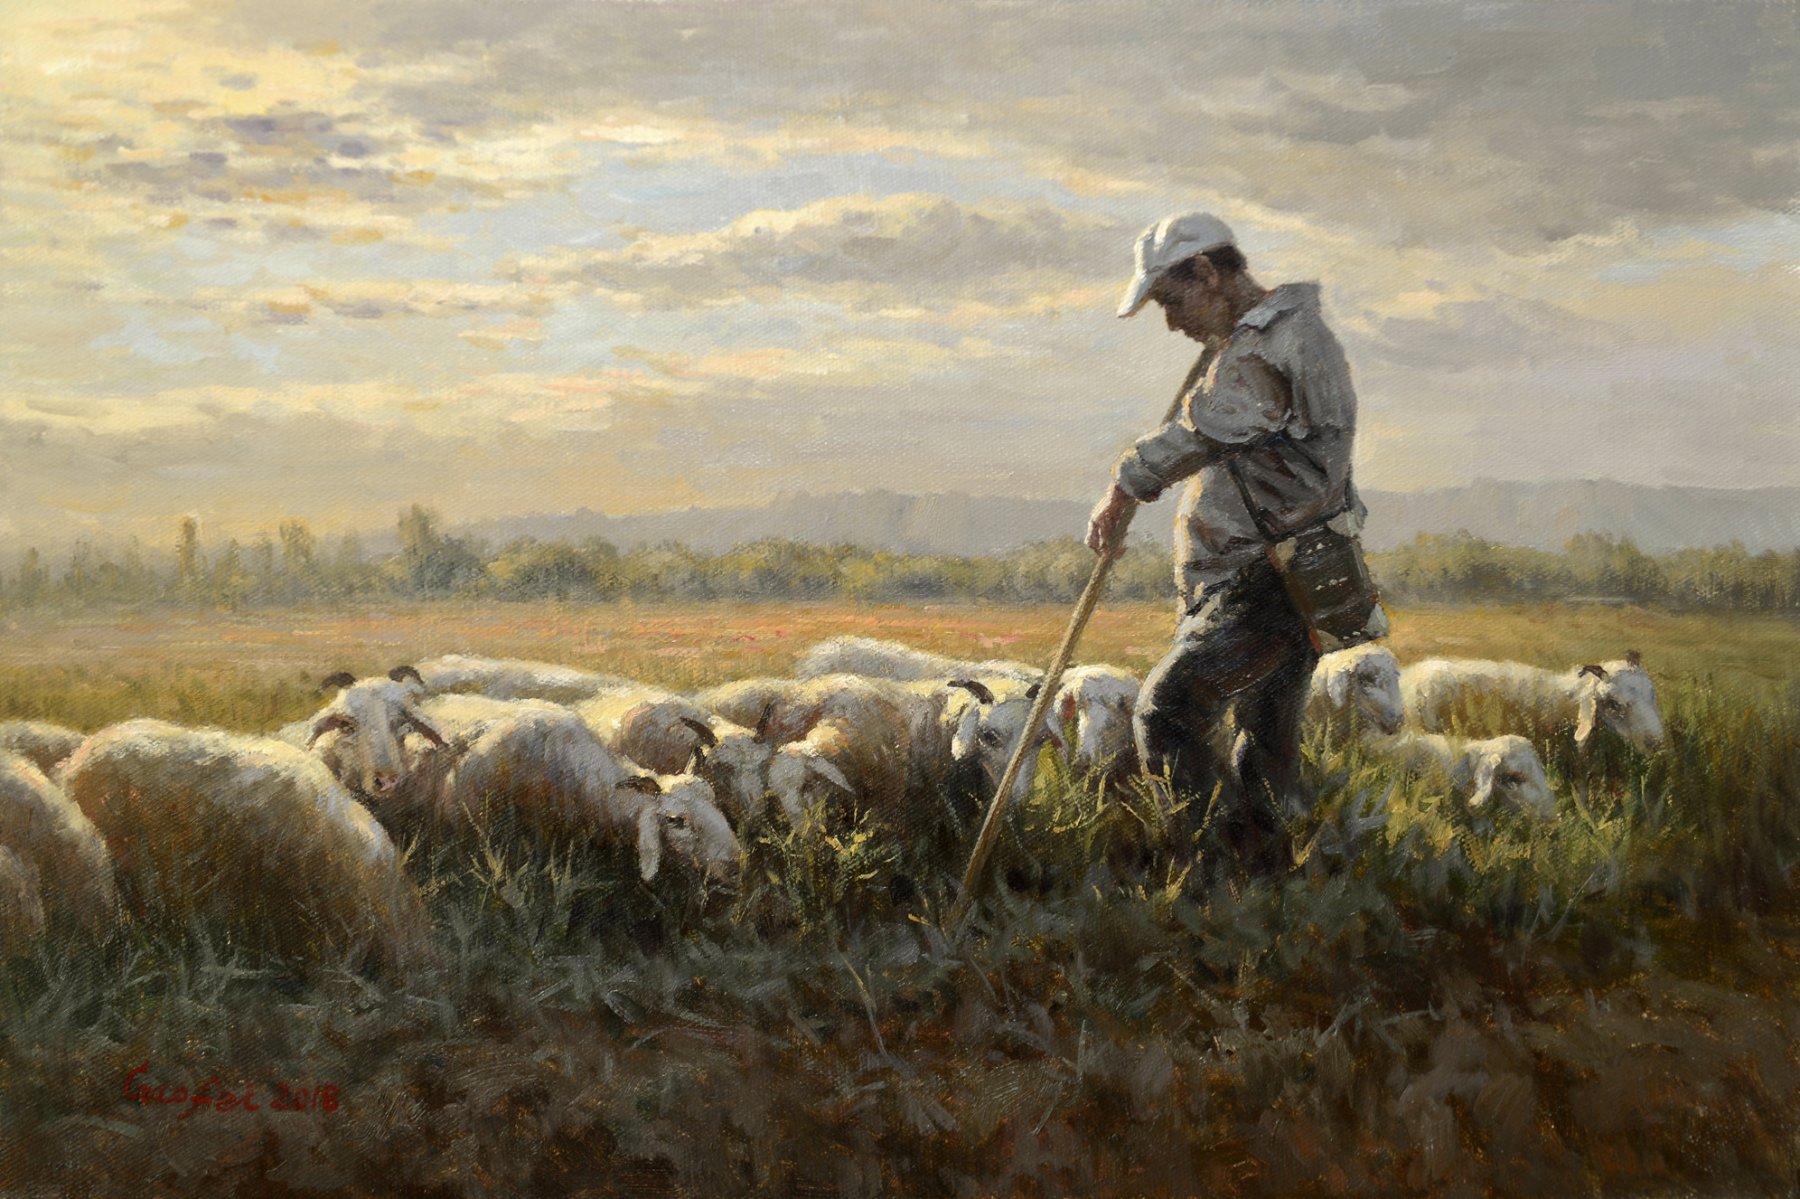 《牧羊》
Shepherd - 高飞 Fei Gao